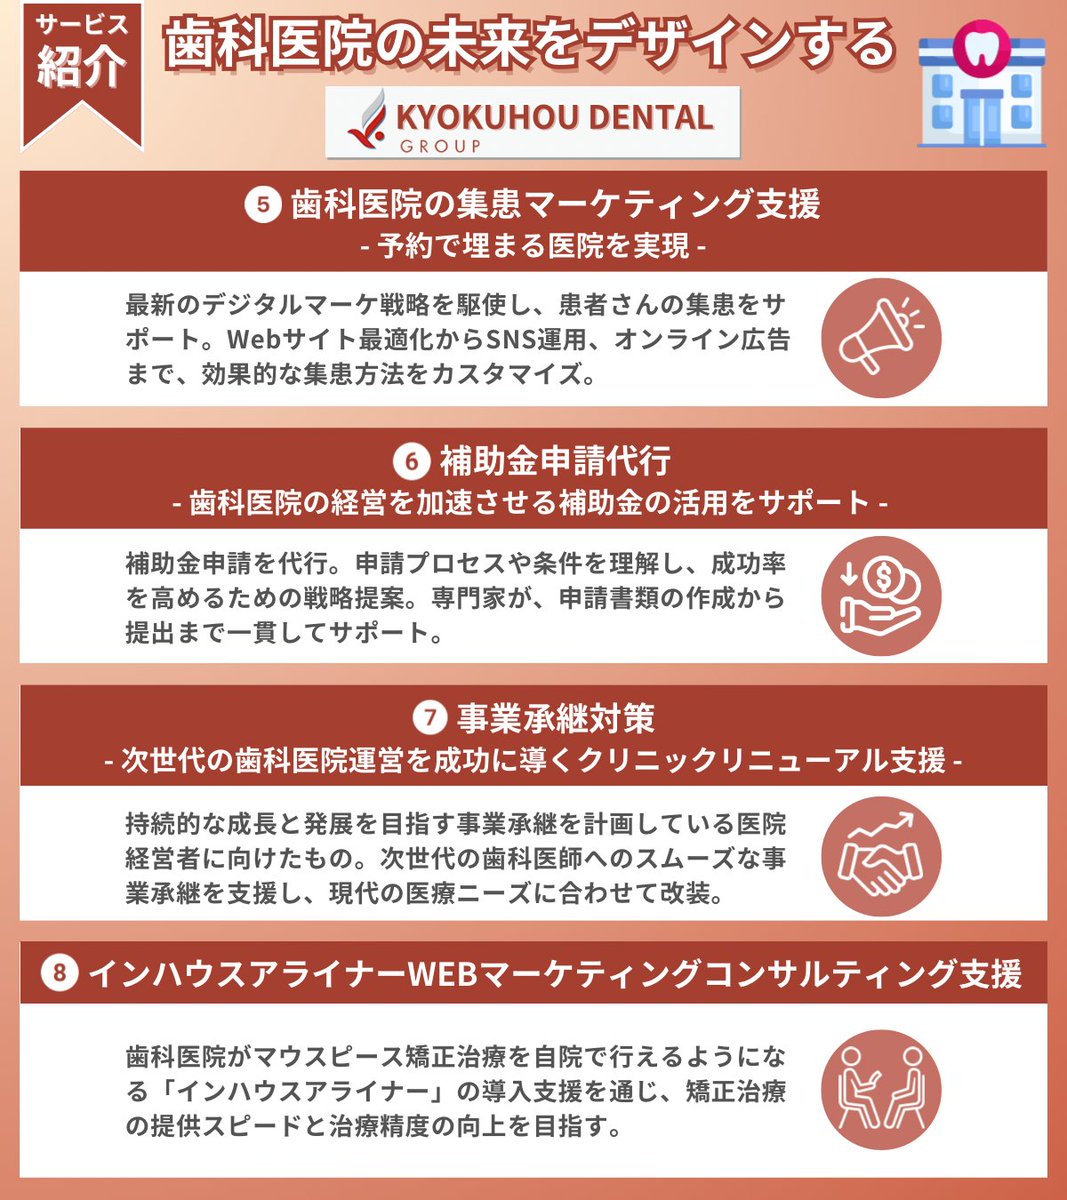 kyokuhou_dental tweet picture